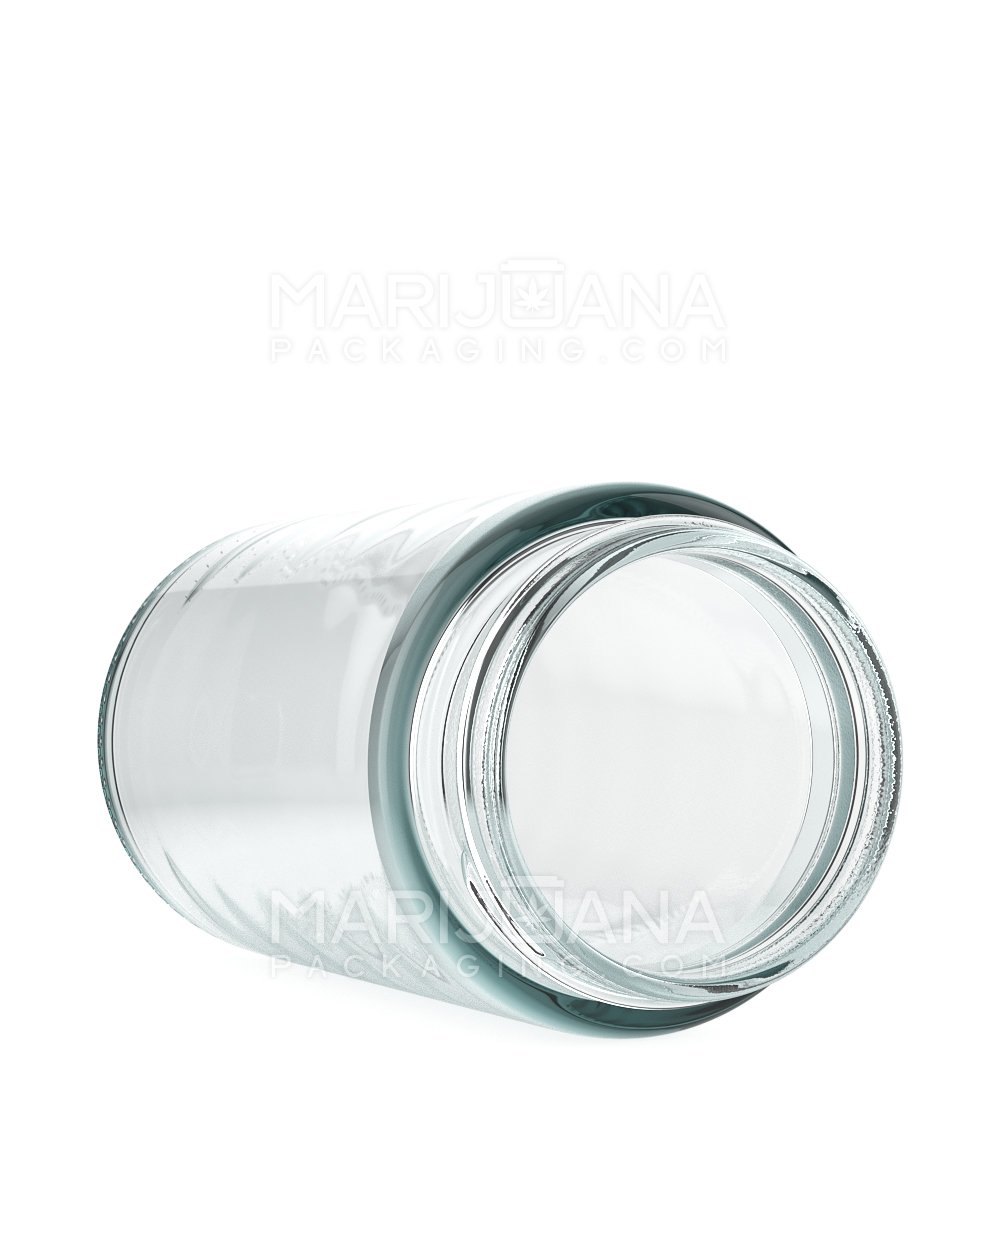 THCR 6oz Clear Glass Jar Child-Resistant Ribbed Flat Cap